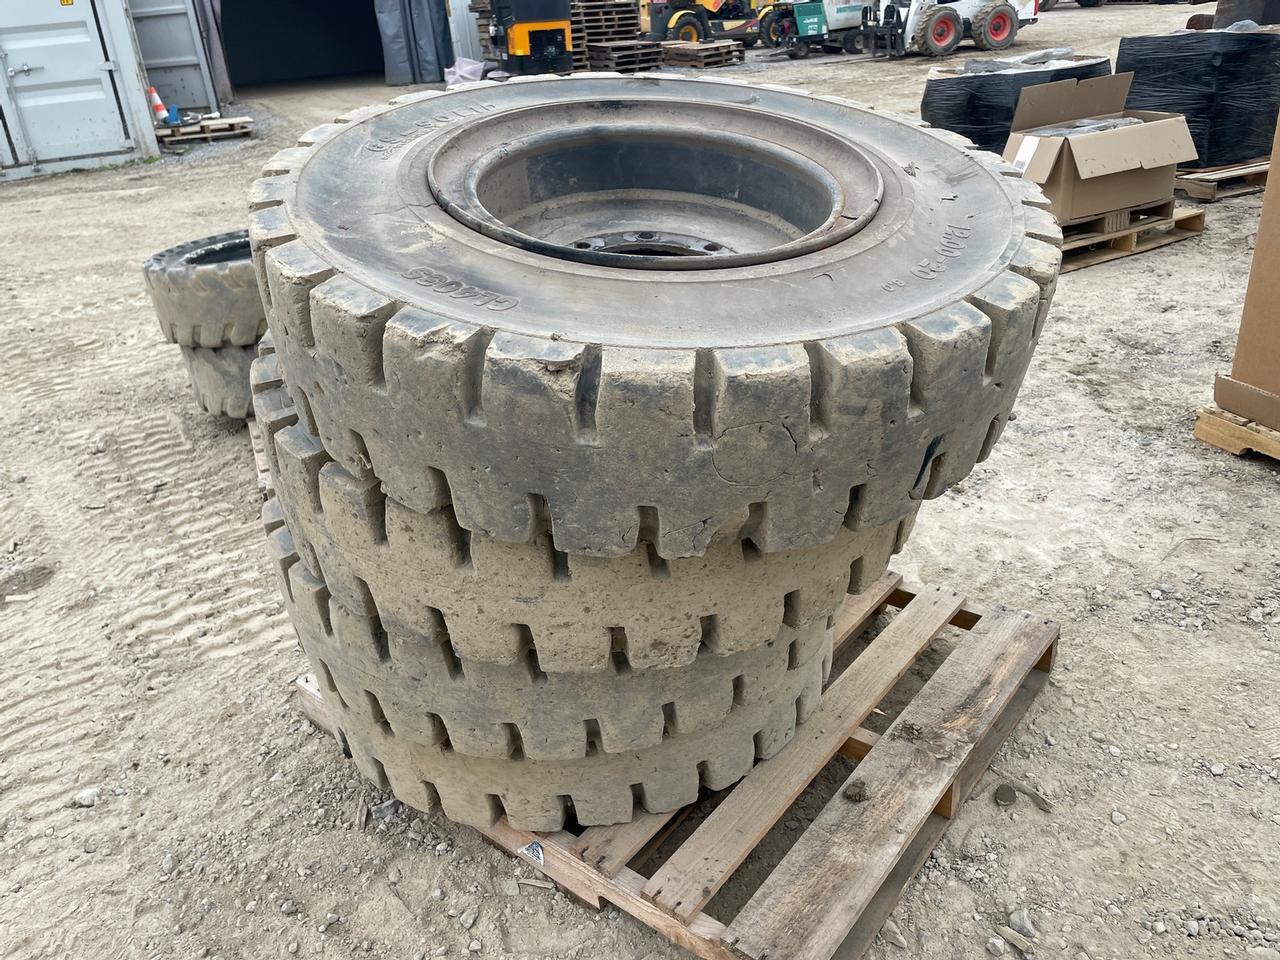 CL403S Industrial Tires